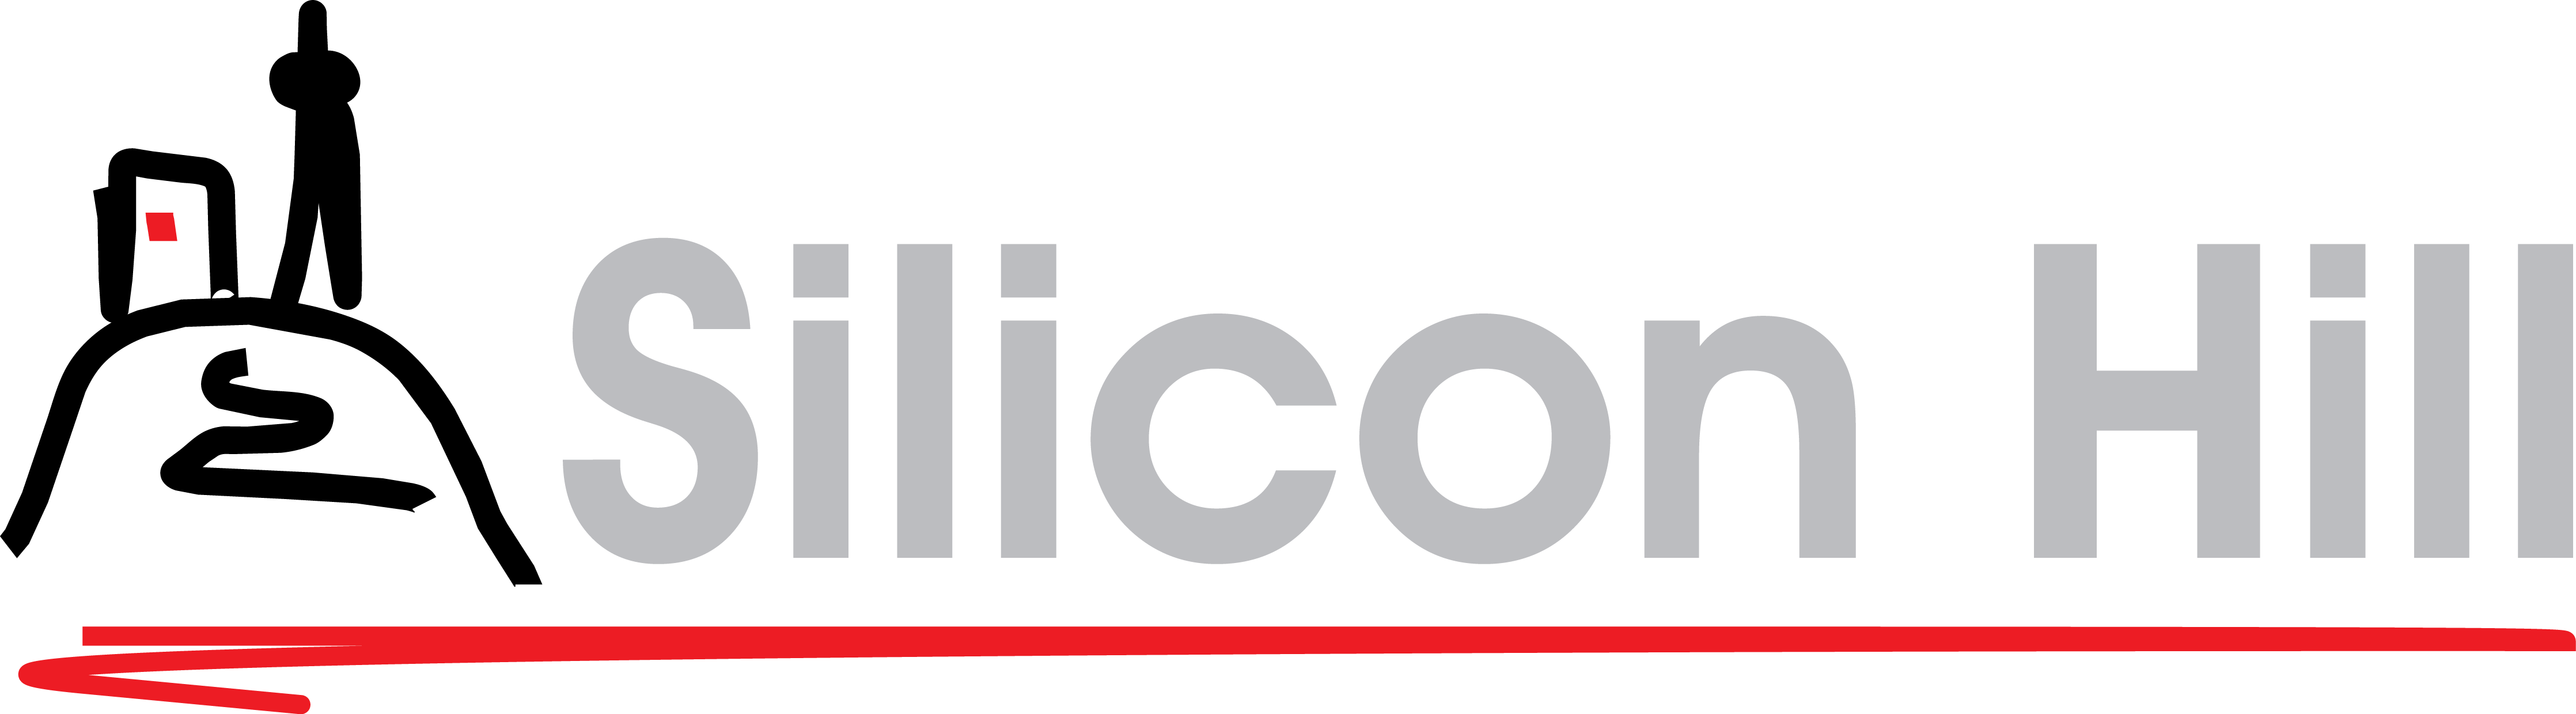 SH-logo-col